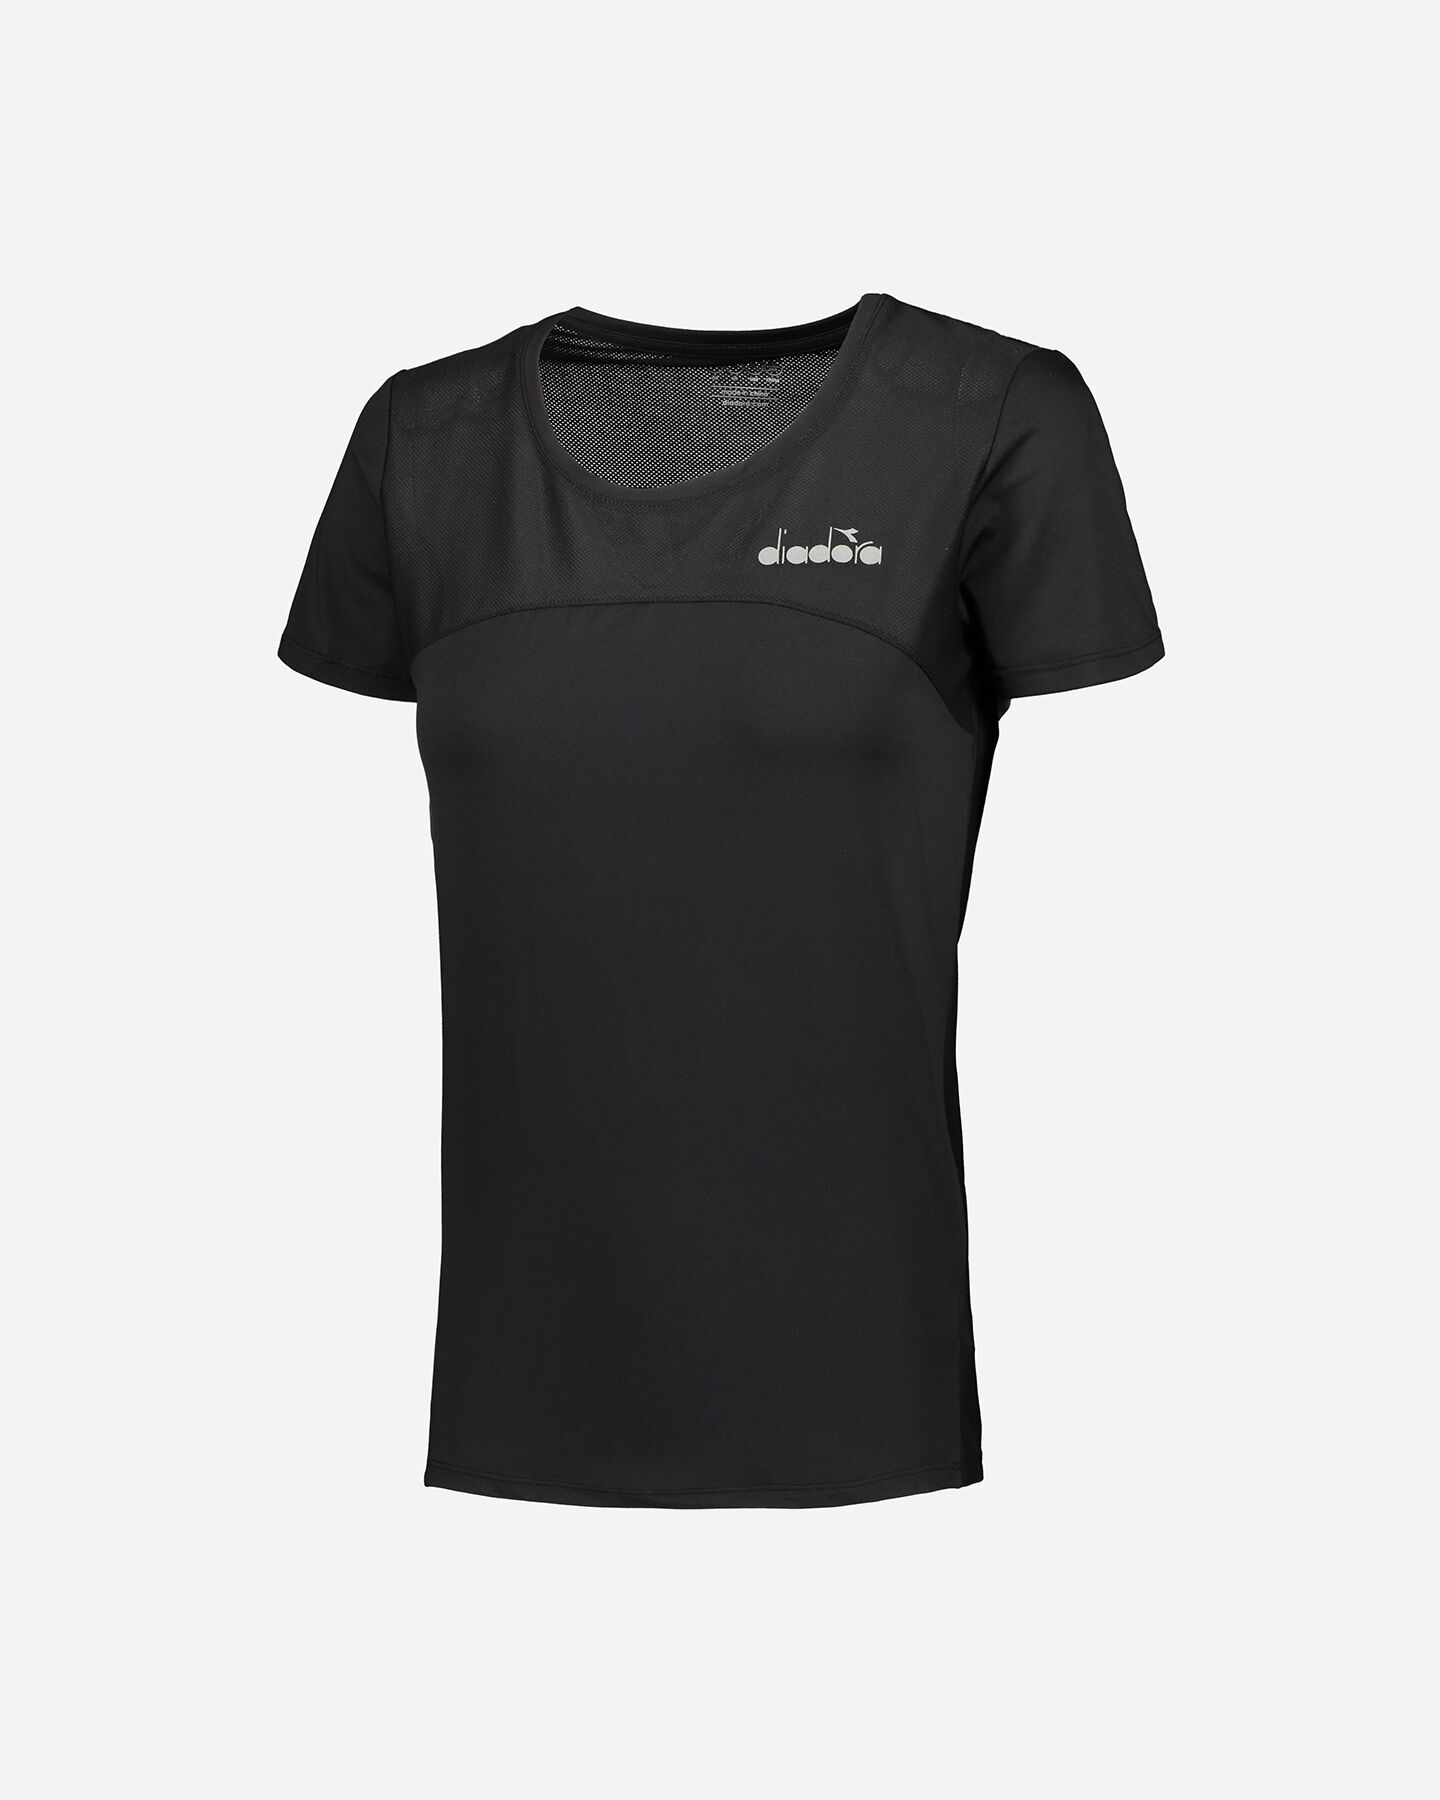  T-Shirt running DIADORA SUPERLIGHT W S5281042|80013|XS scatto 0